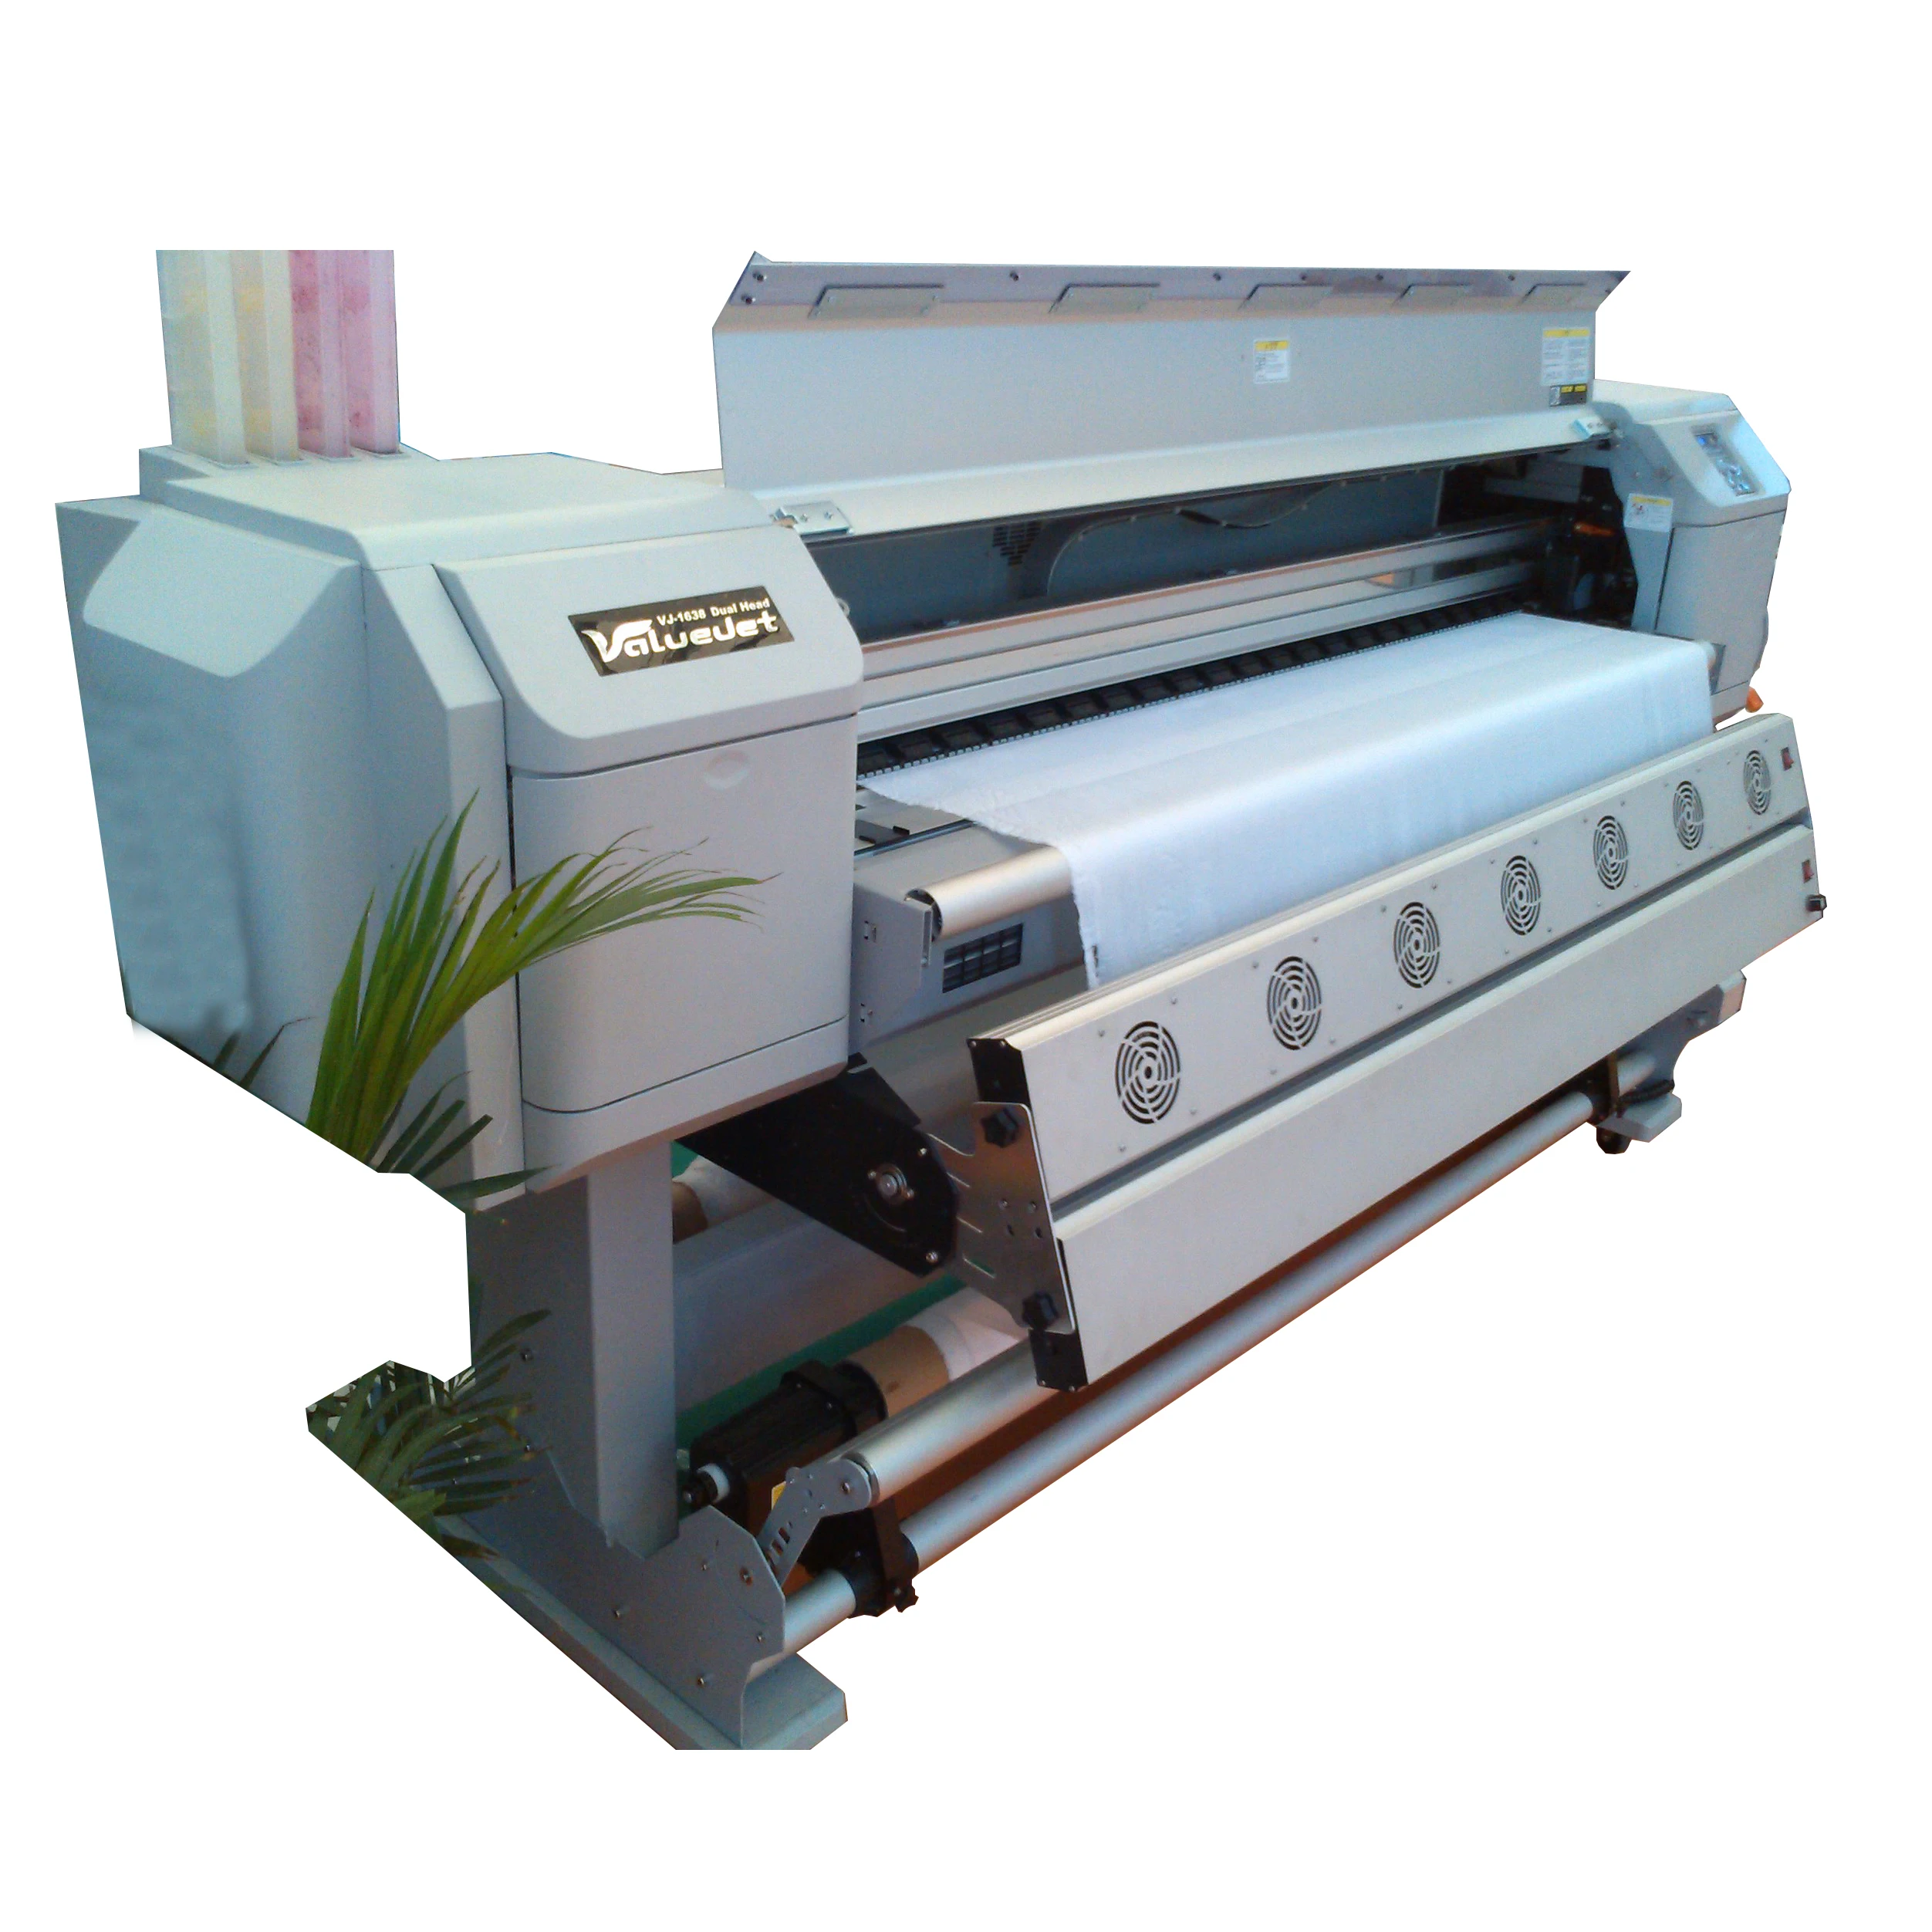 multi color digital printing machine